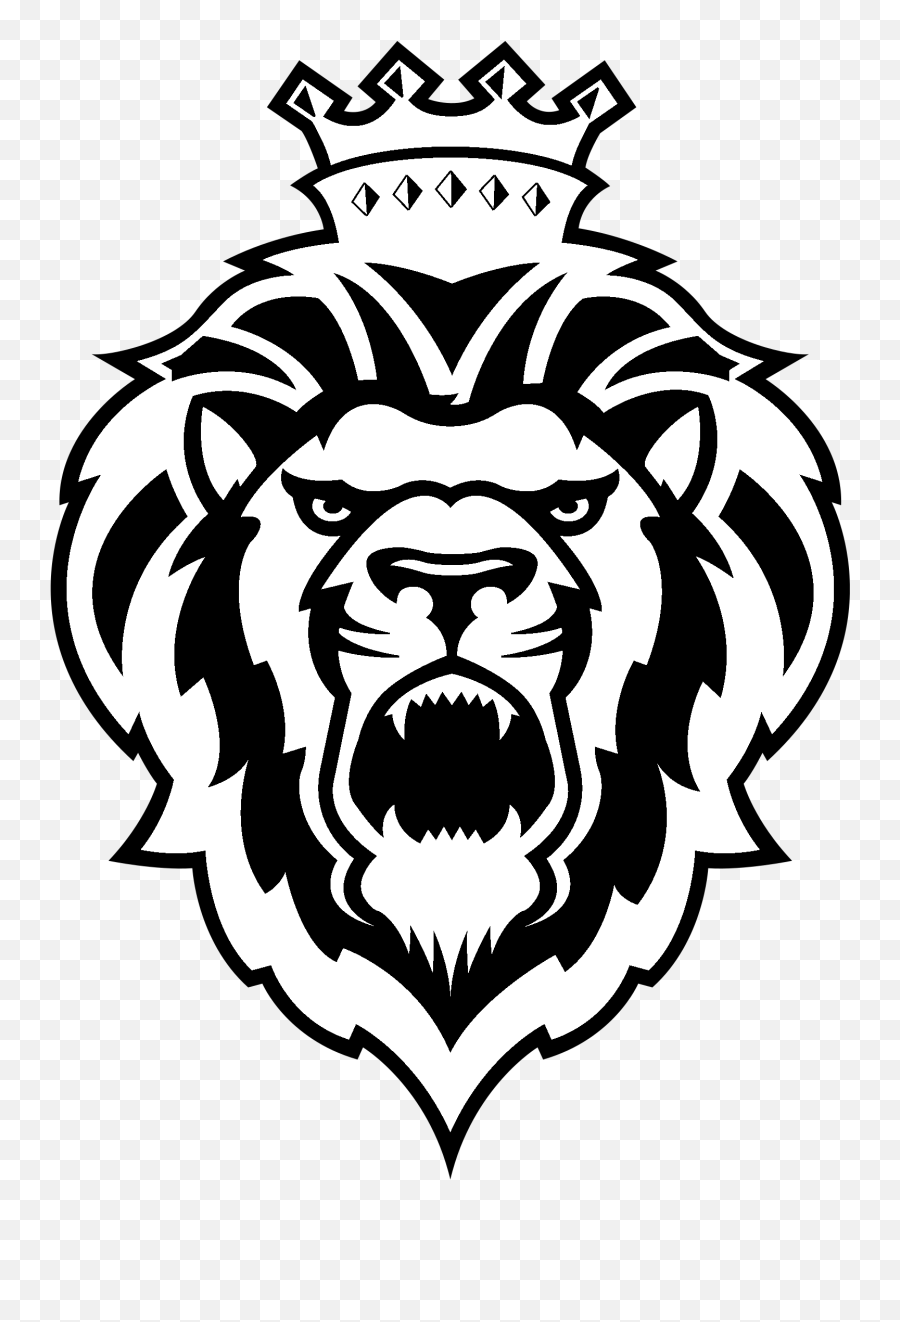 Reading Royals Logo Png Transparent - Lion With Crown Vector Png,Royals Logo Png